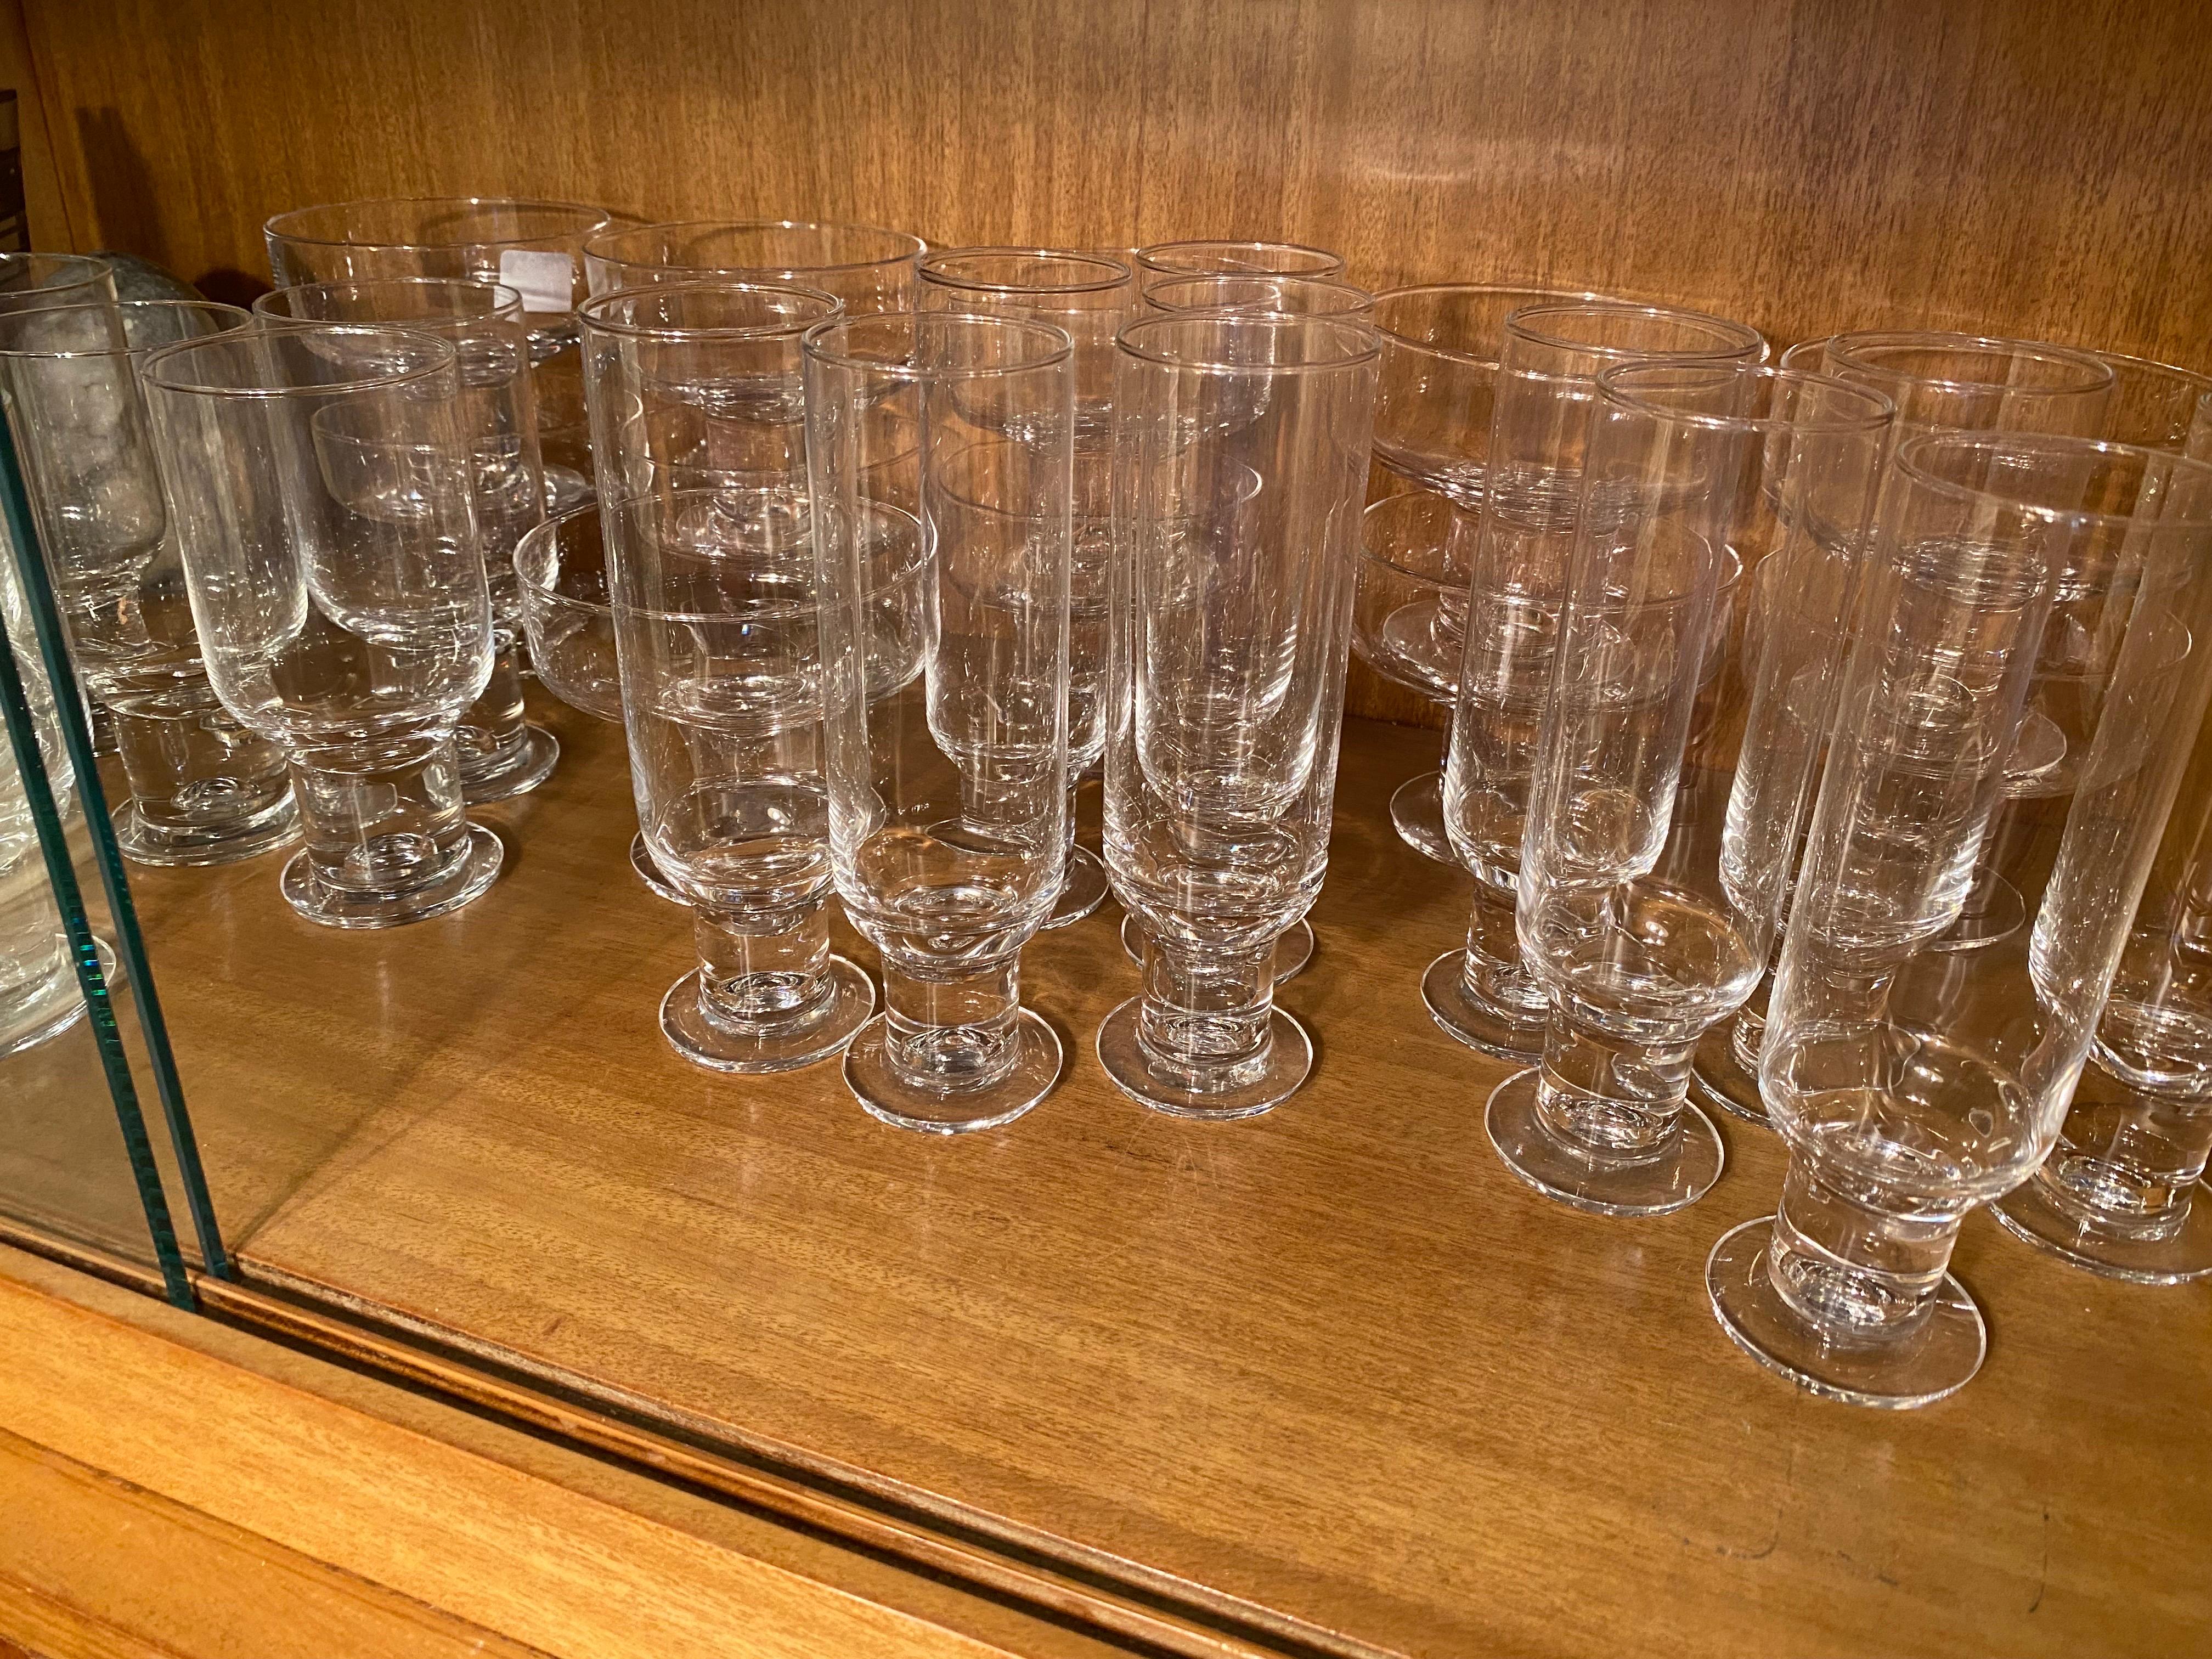 72 Piece Arabia Drinking Glass Set, 6 sizes, 12 per size!
Tall Flutes 2